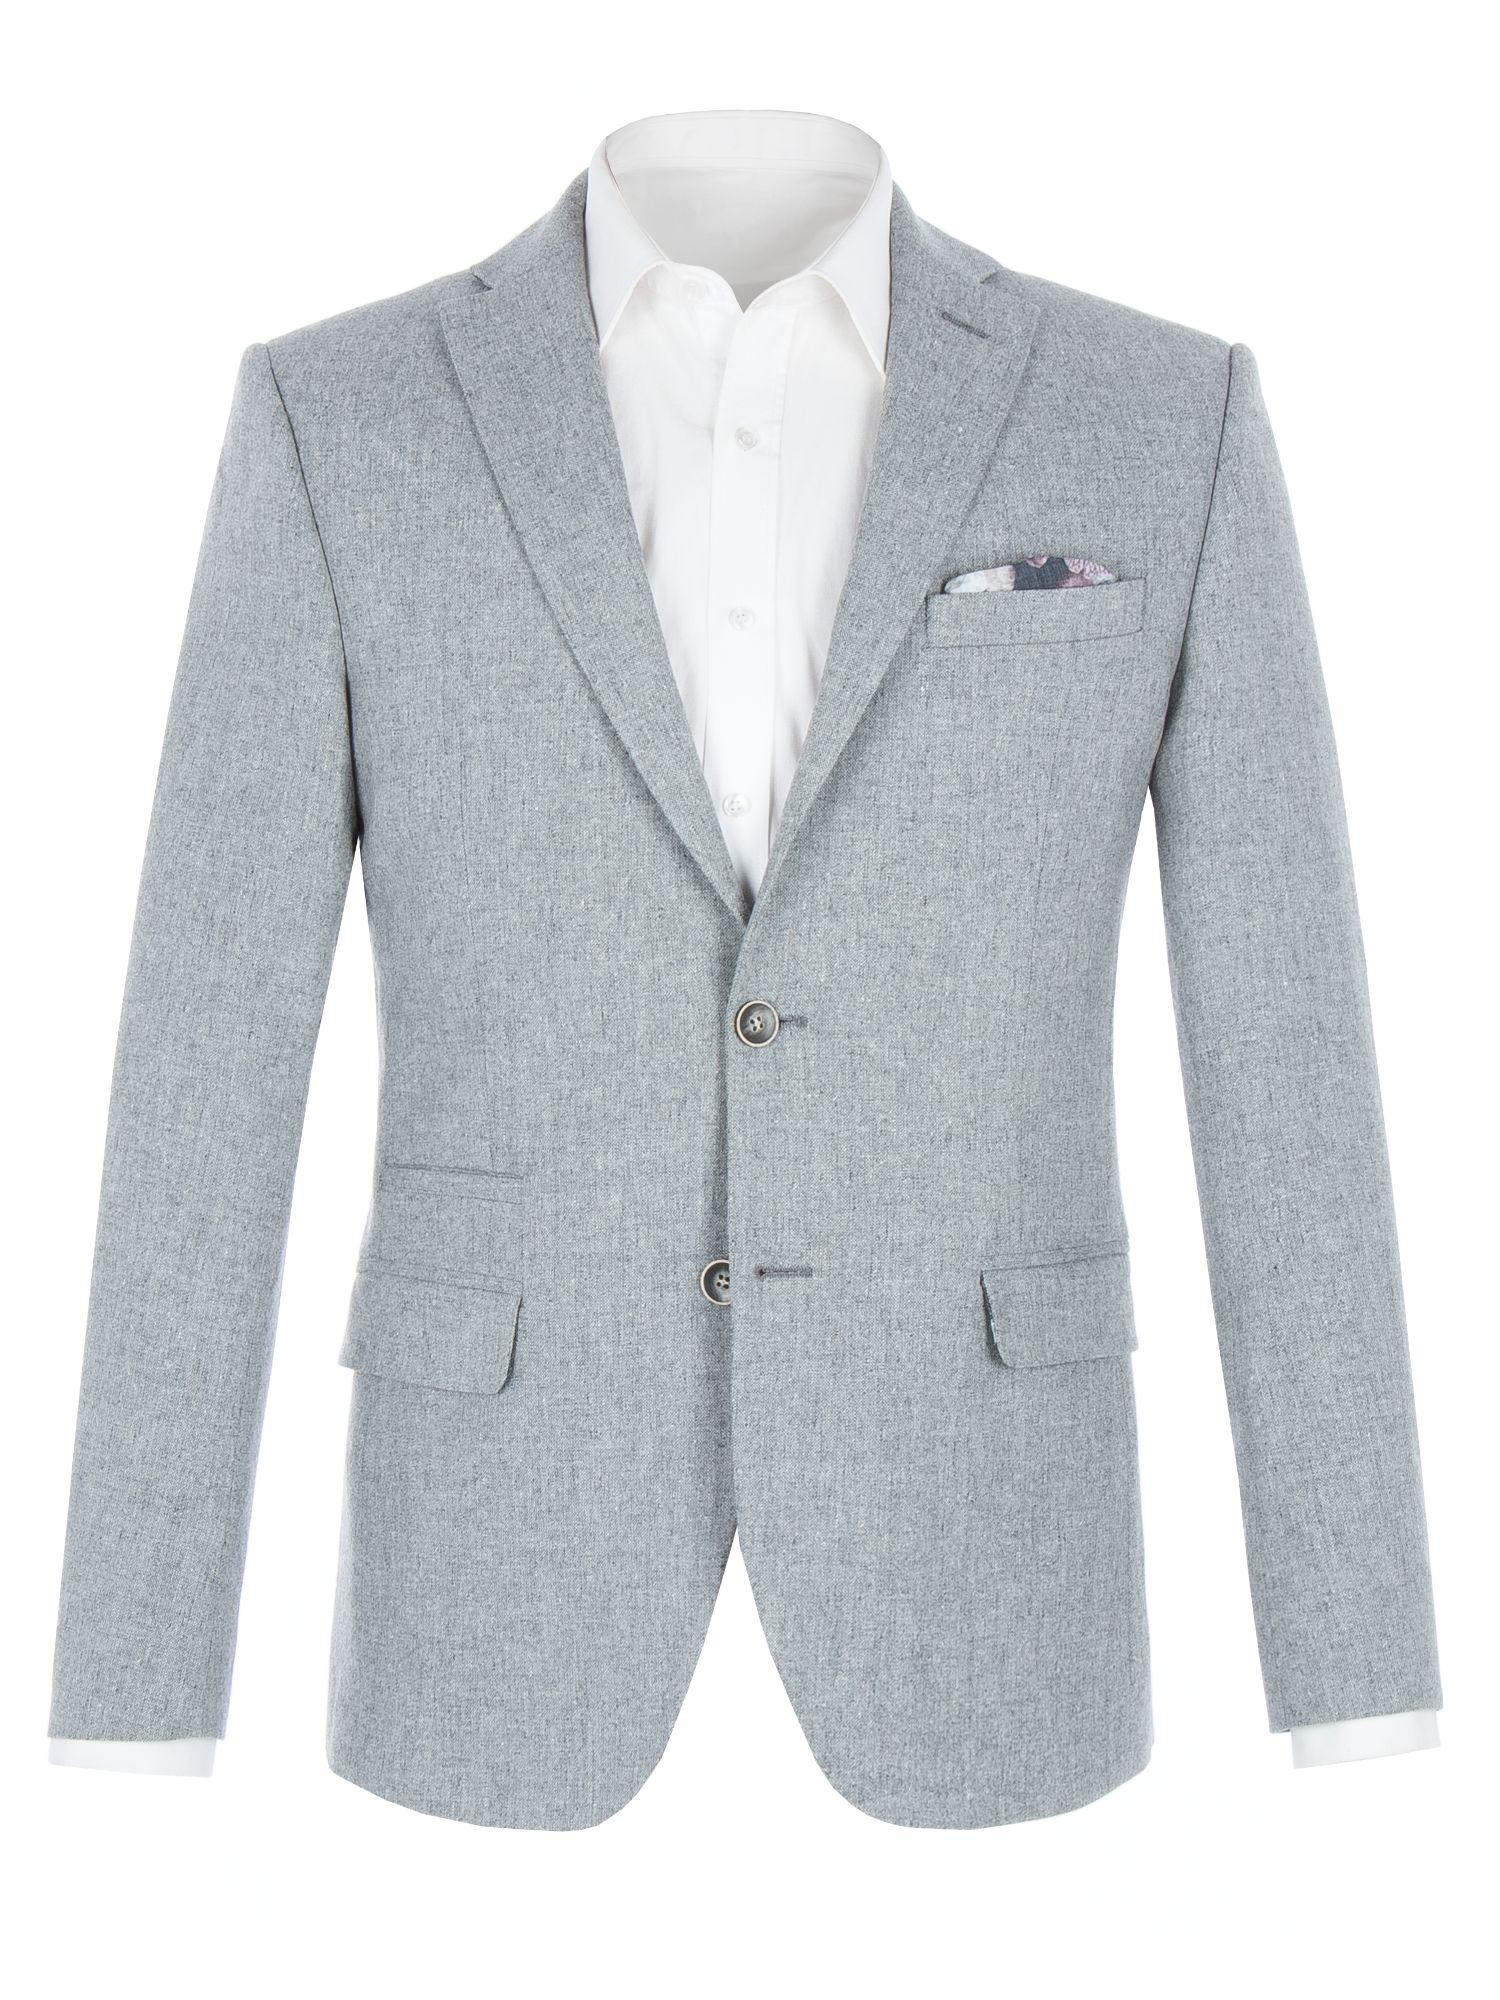 Alexandre of england Berwick Grey Speckle Jacket in Gray for Men | Lyst